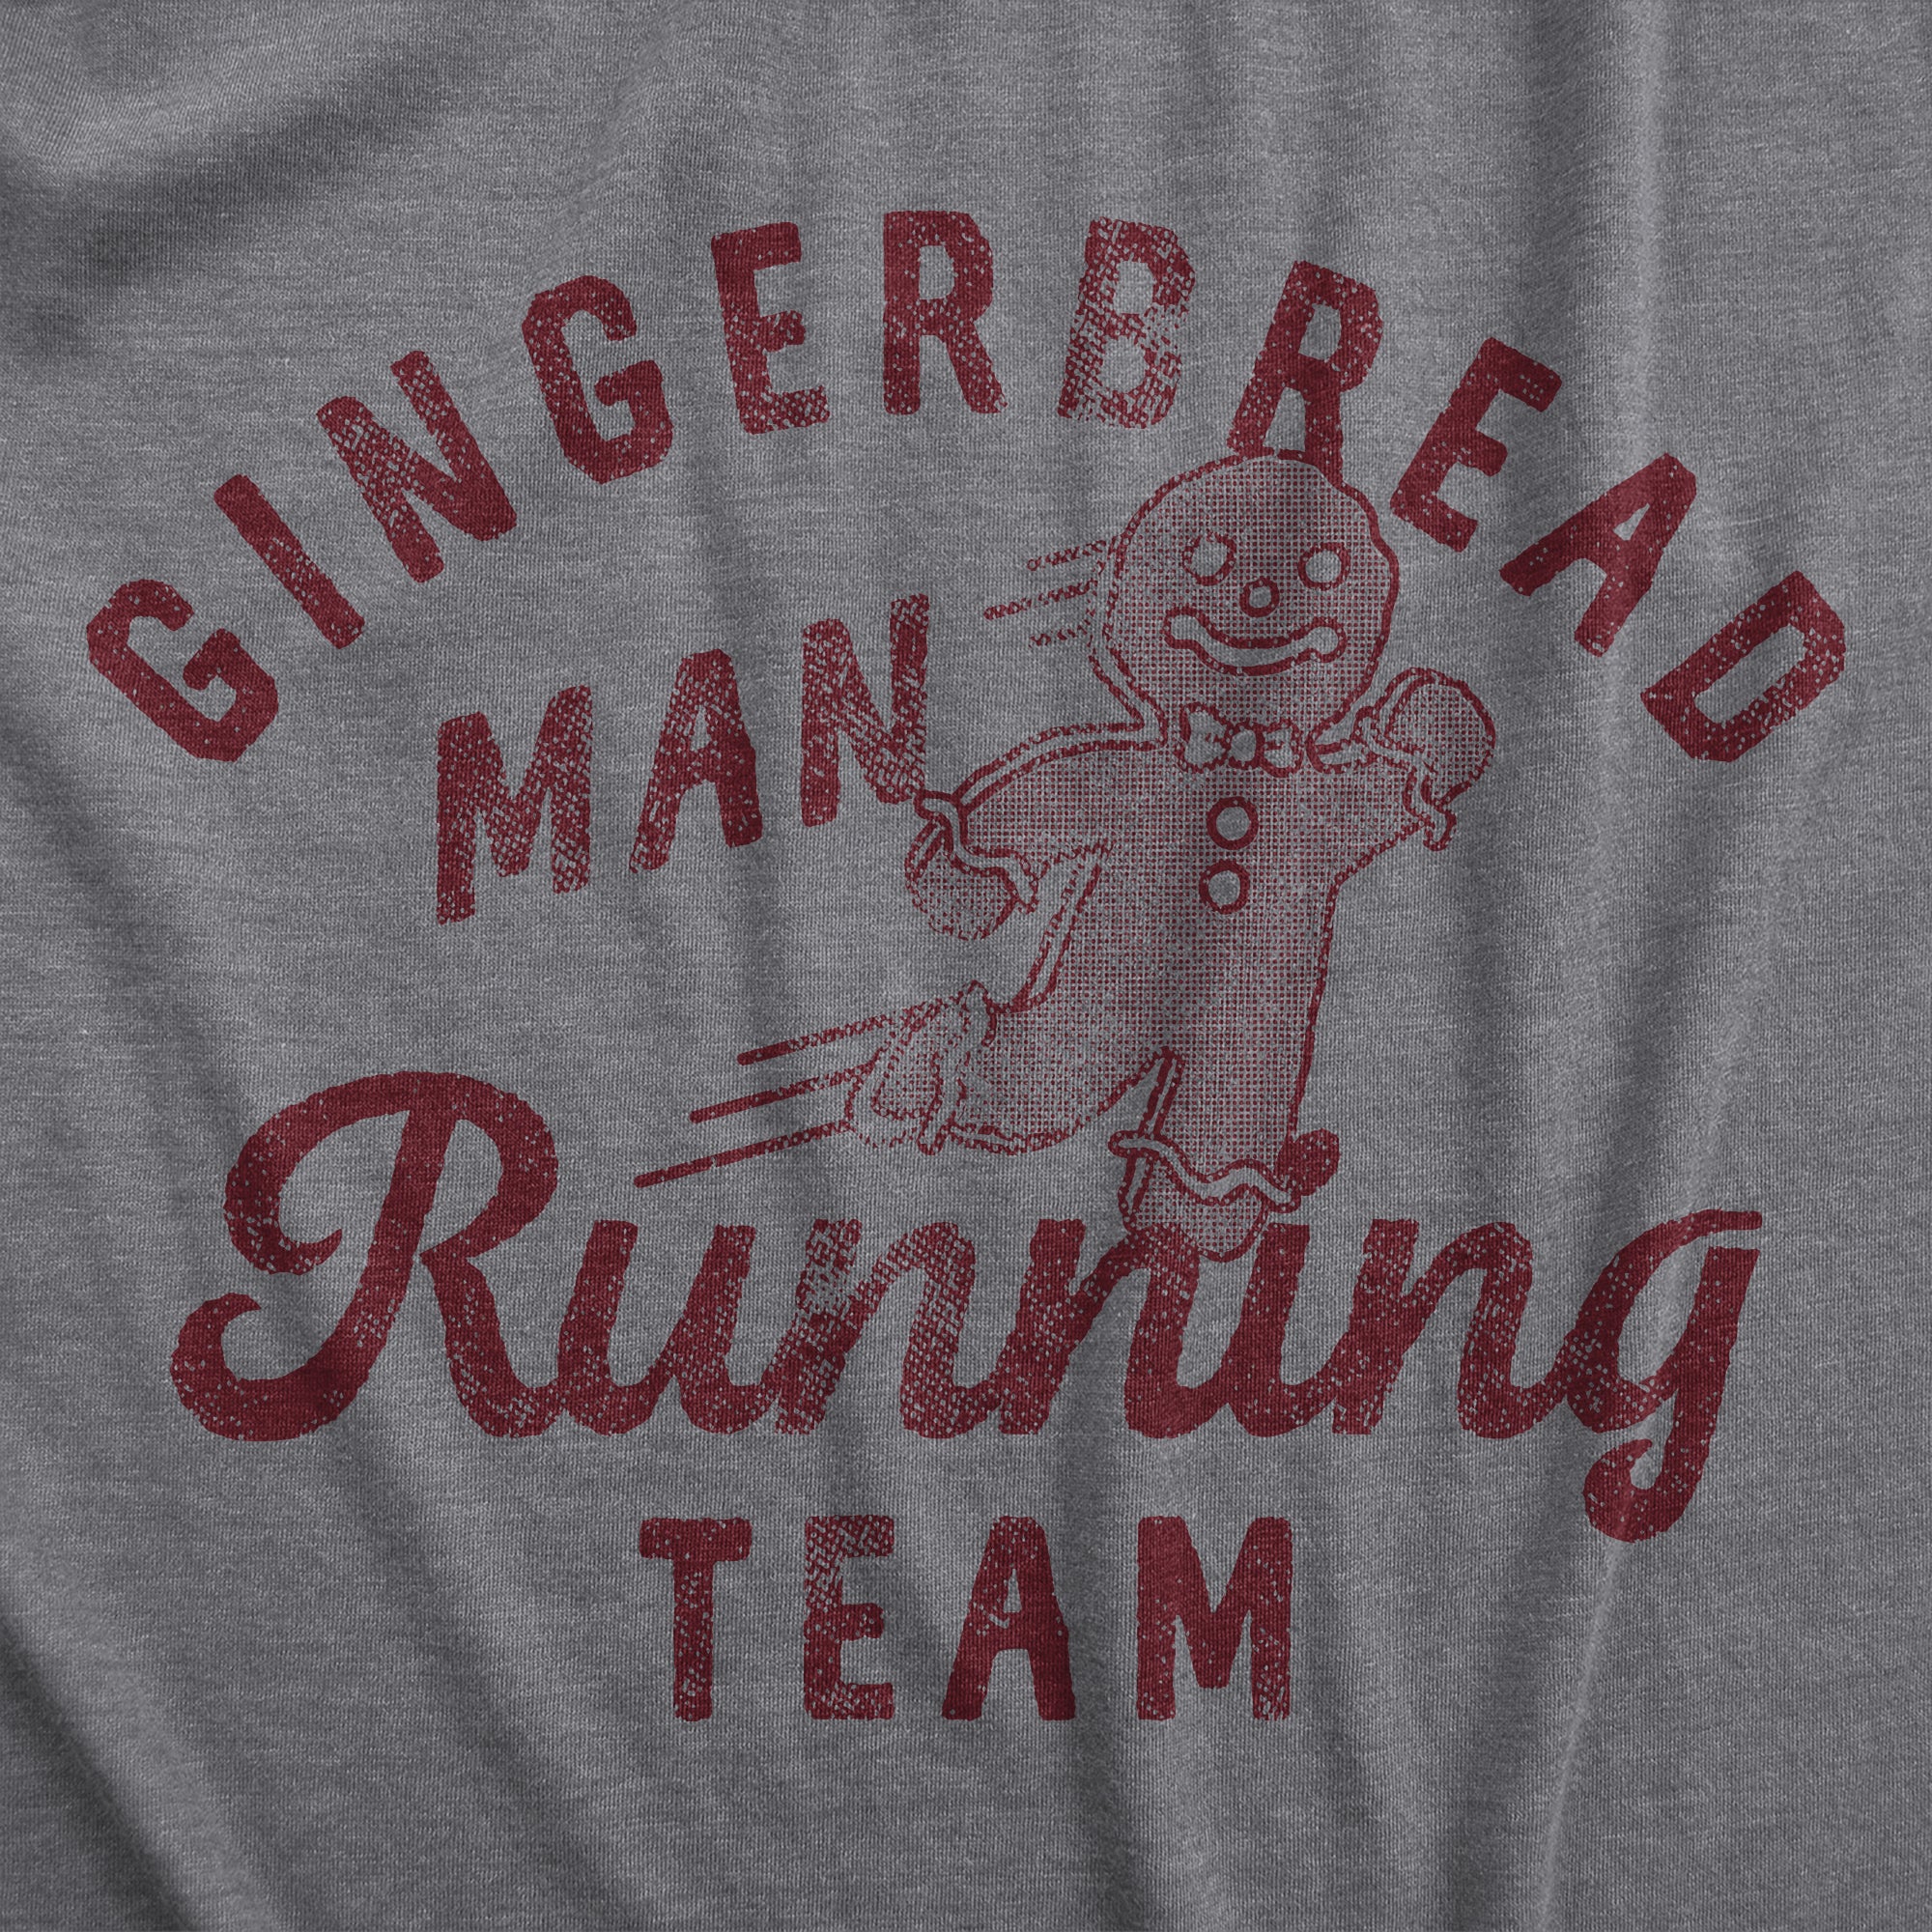 Funny Dark Heather Grey - RUNNING Gingerbread Man Running Team Womens T Shirt Nerdy Christmas Food Sarcastic Tee